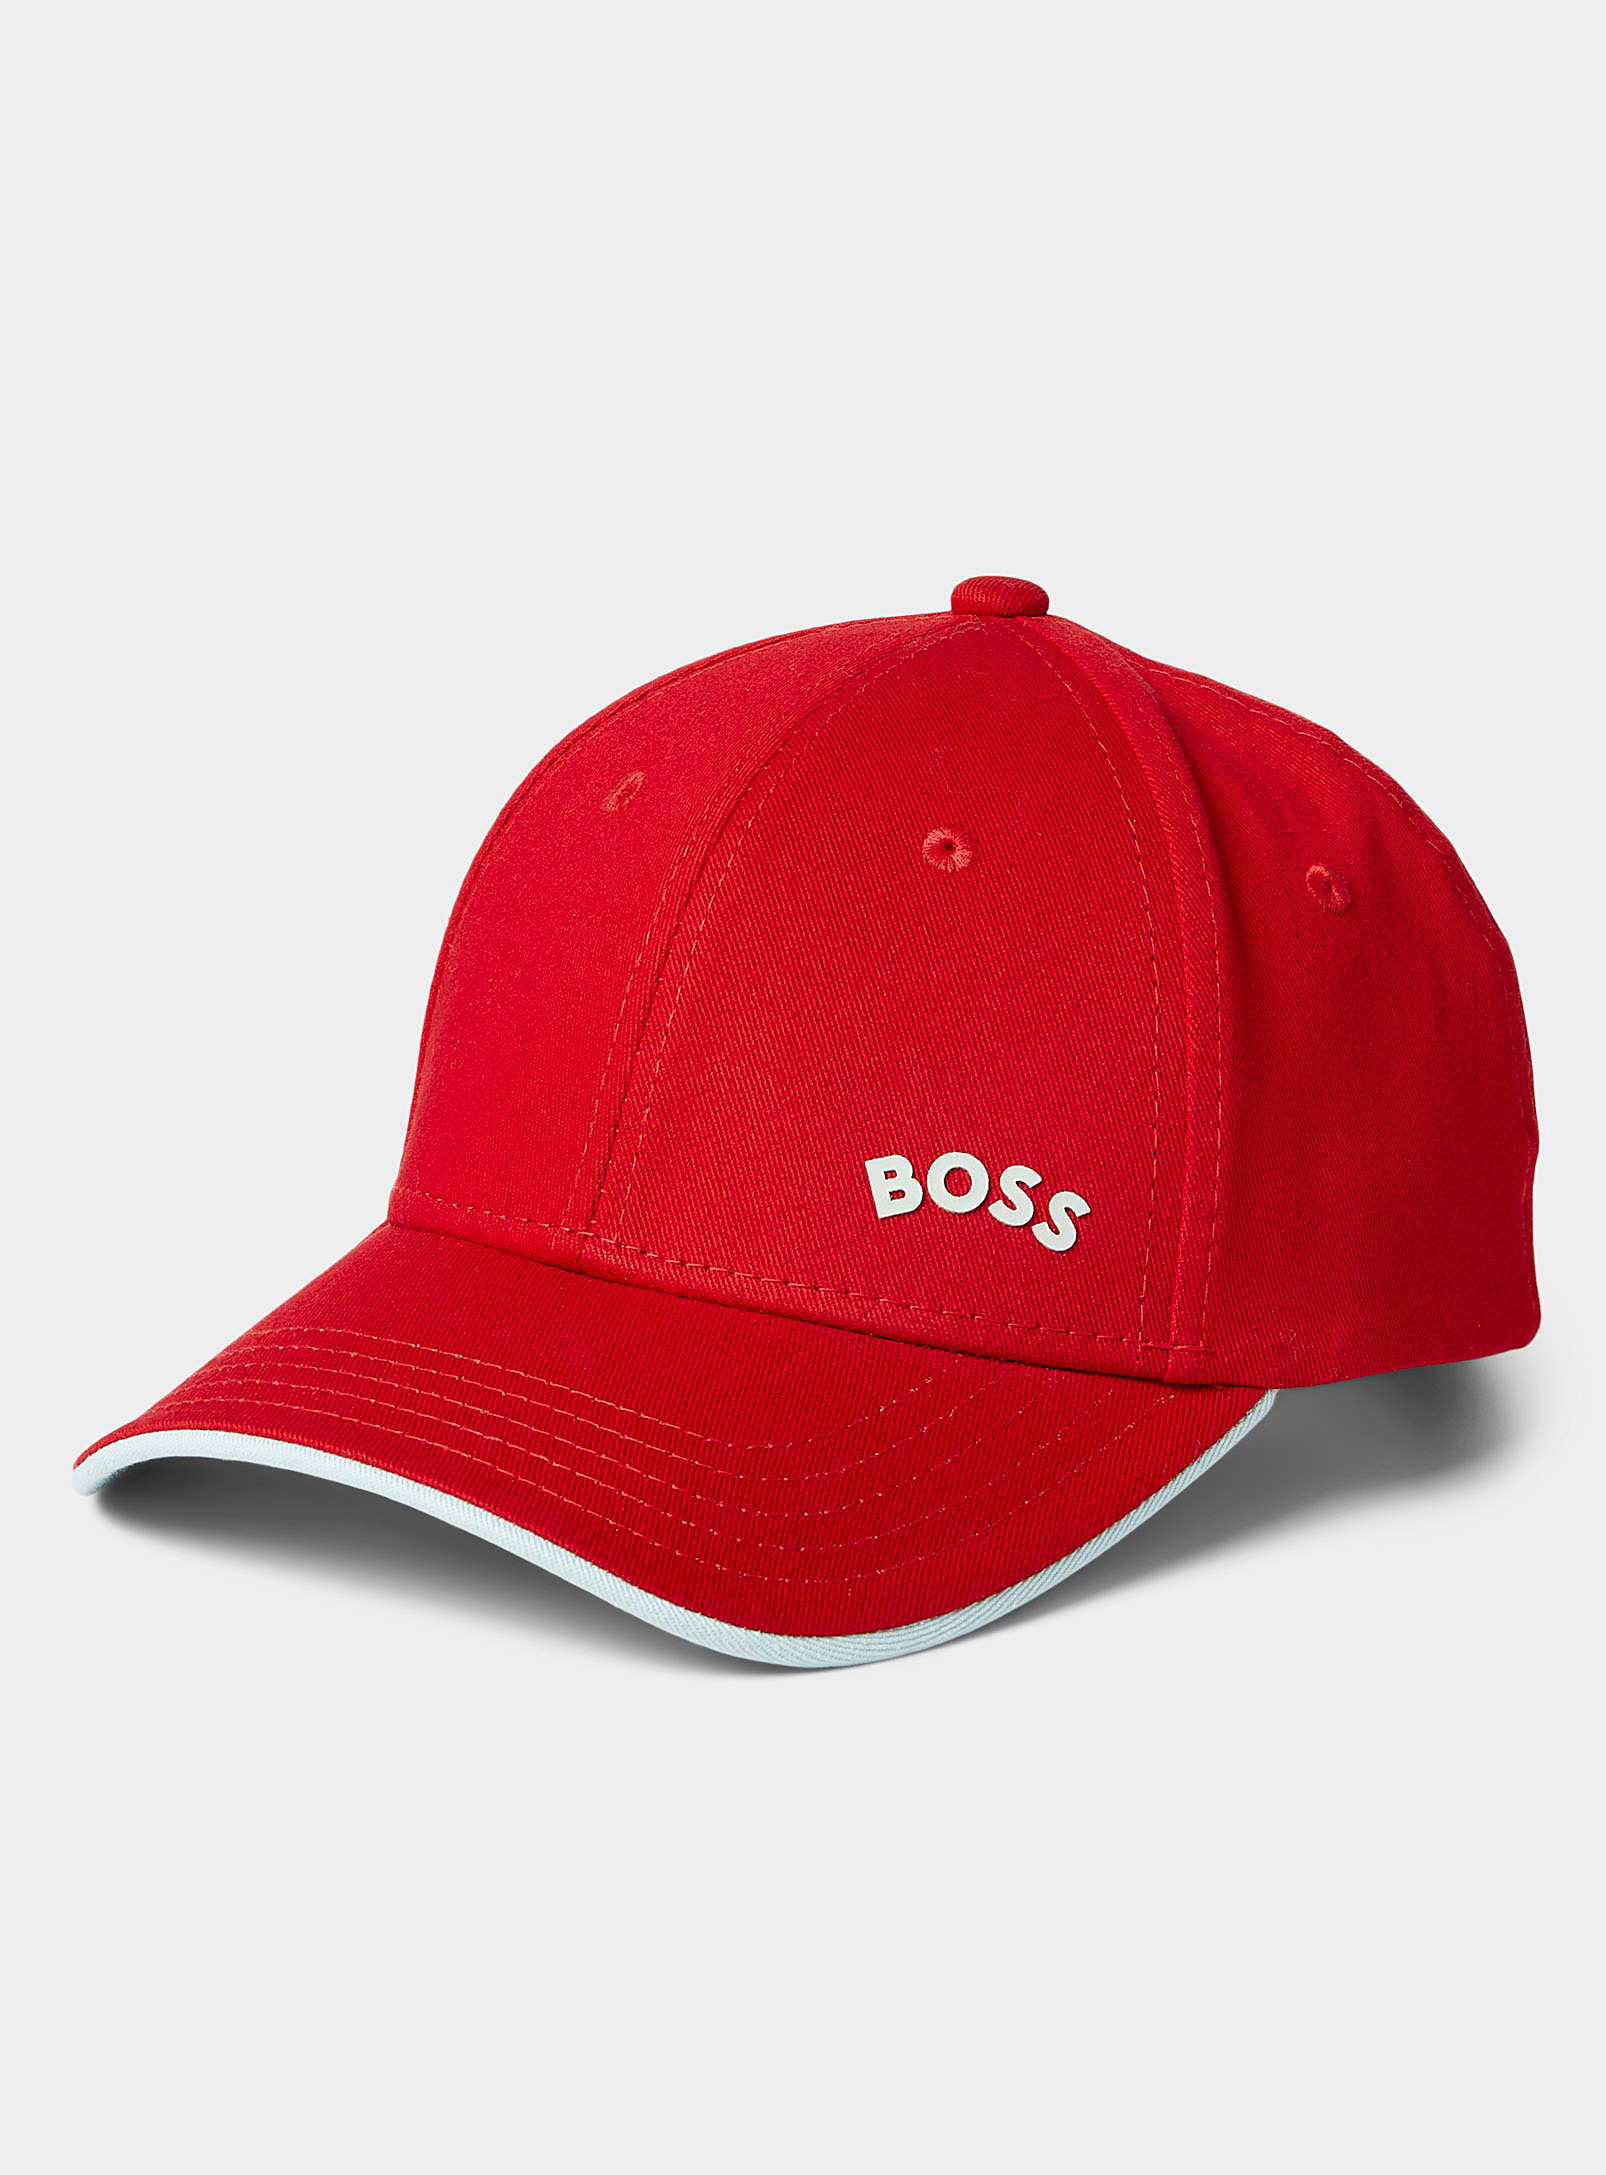 HUGO BOSS CURVED LOGO CAP